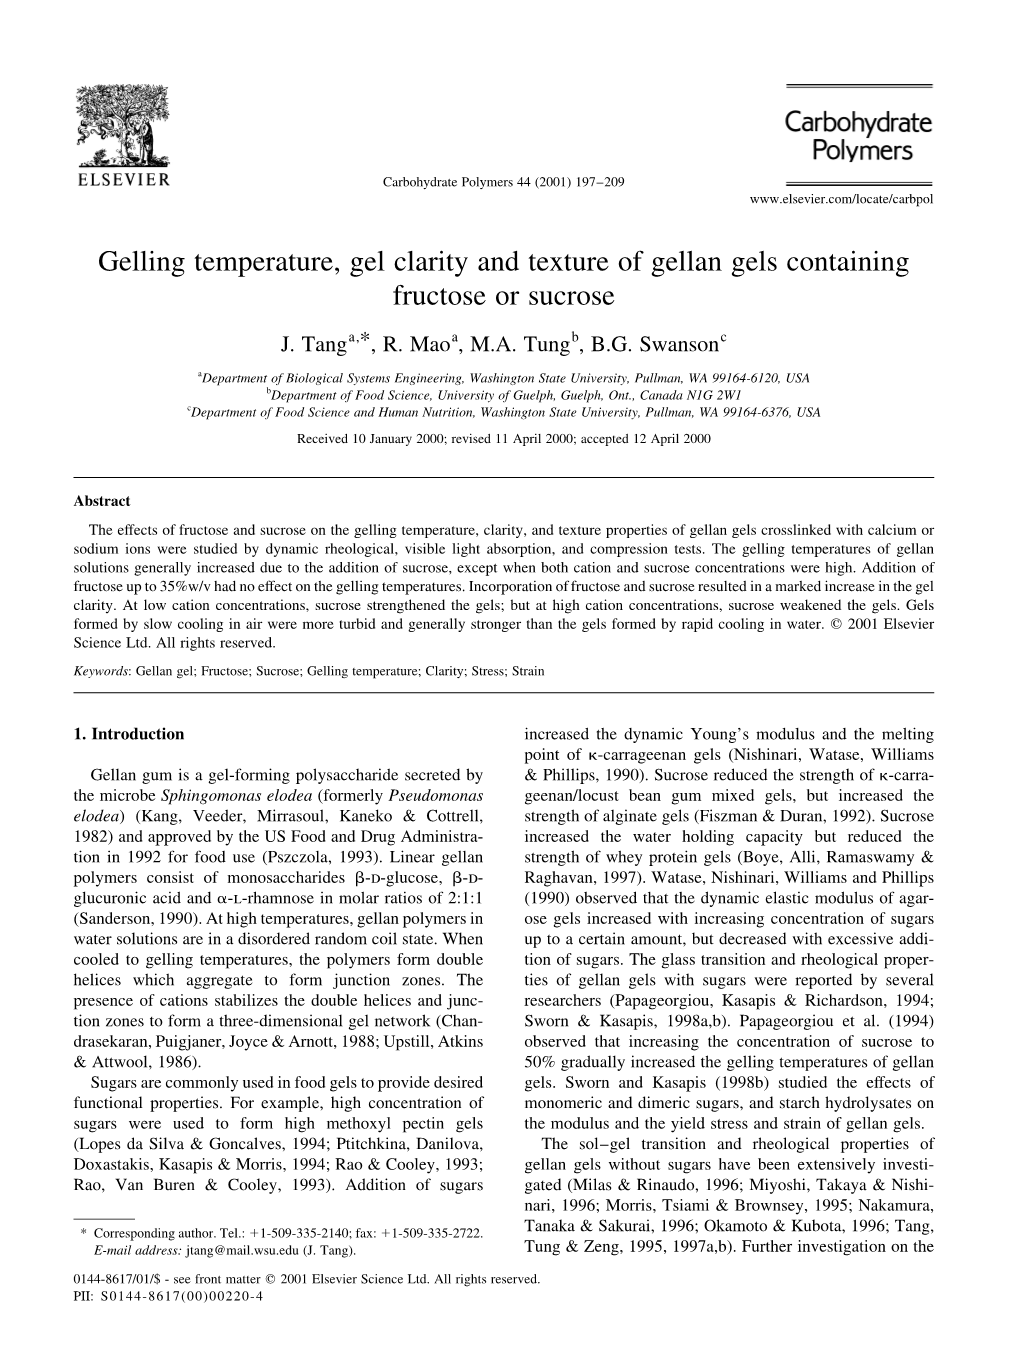 Gelling Temperature, Gel Clarity and Texture of Gellan Gels Containing Fructose Or Sucrose